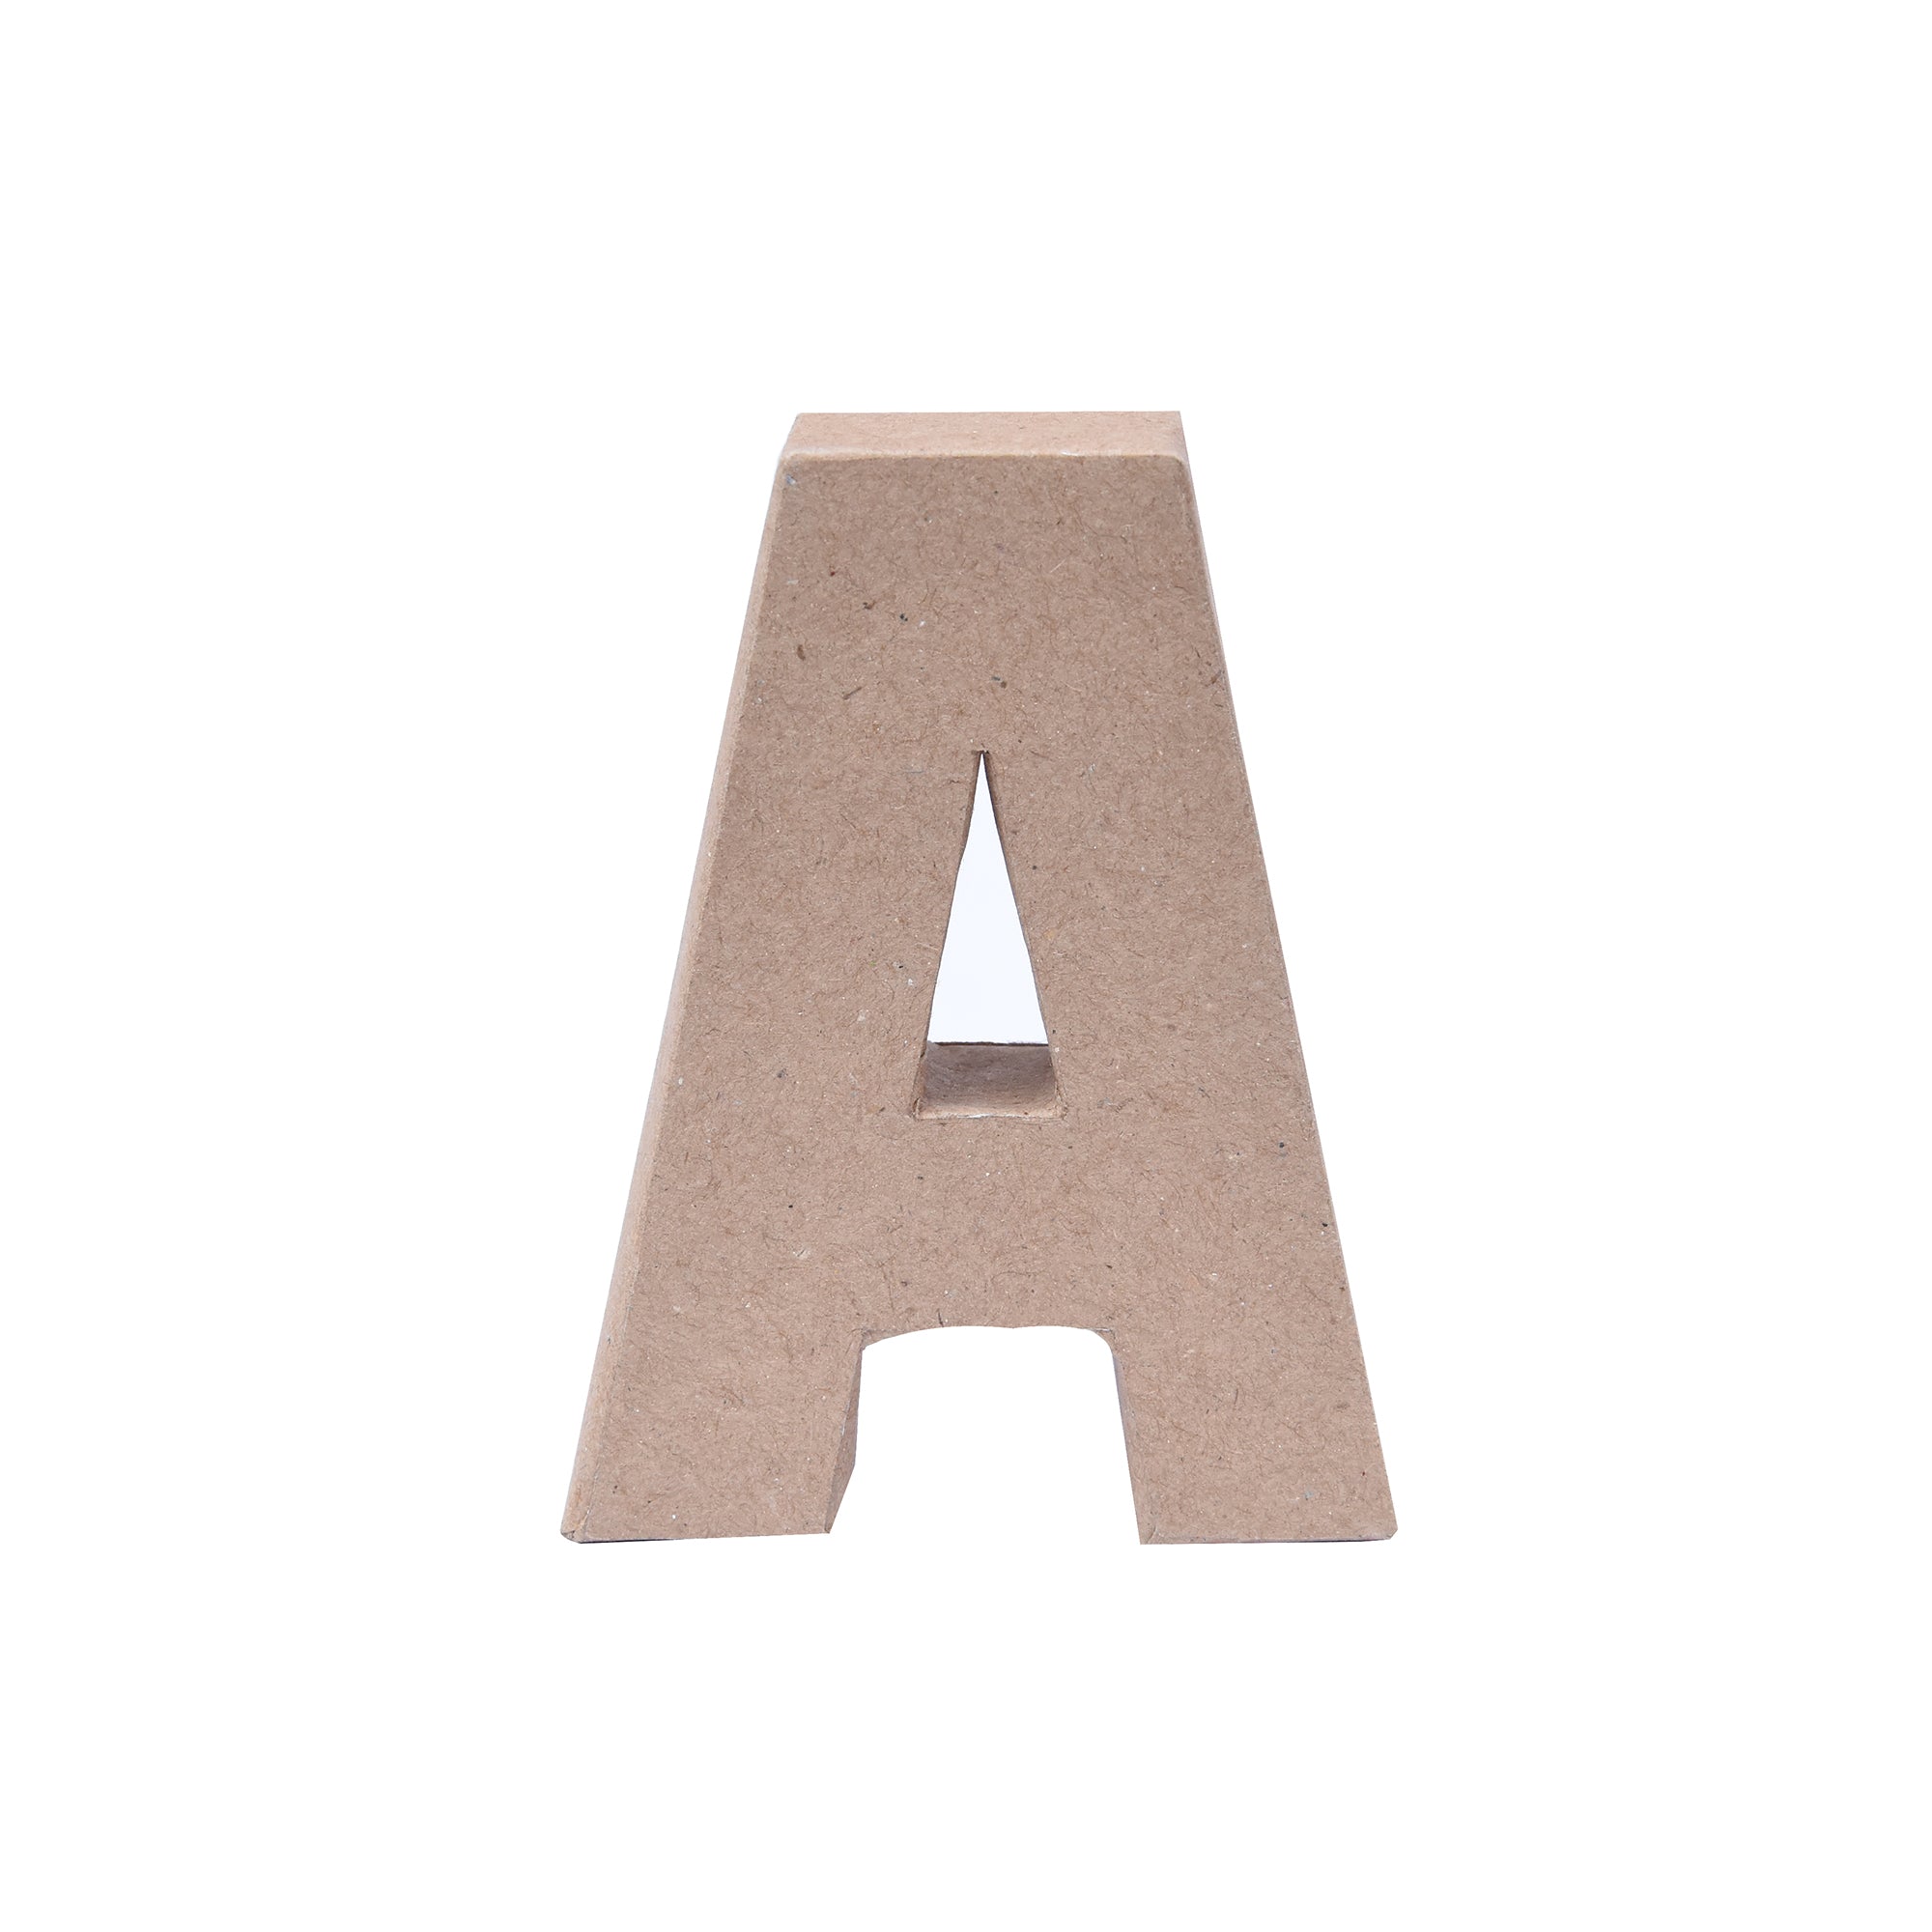 Paper Mache Alphabet A Approx 3 X 4 X 0.78Inch 1Pc Lb